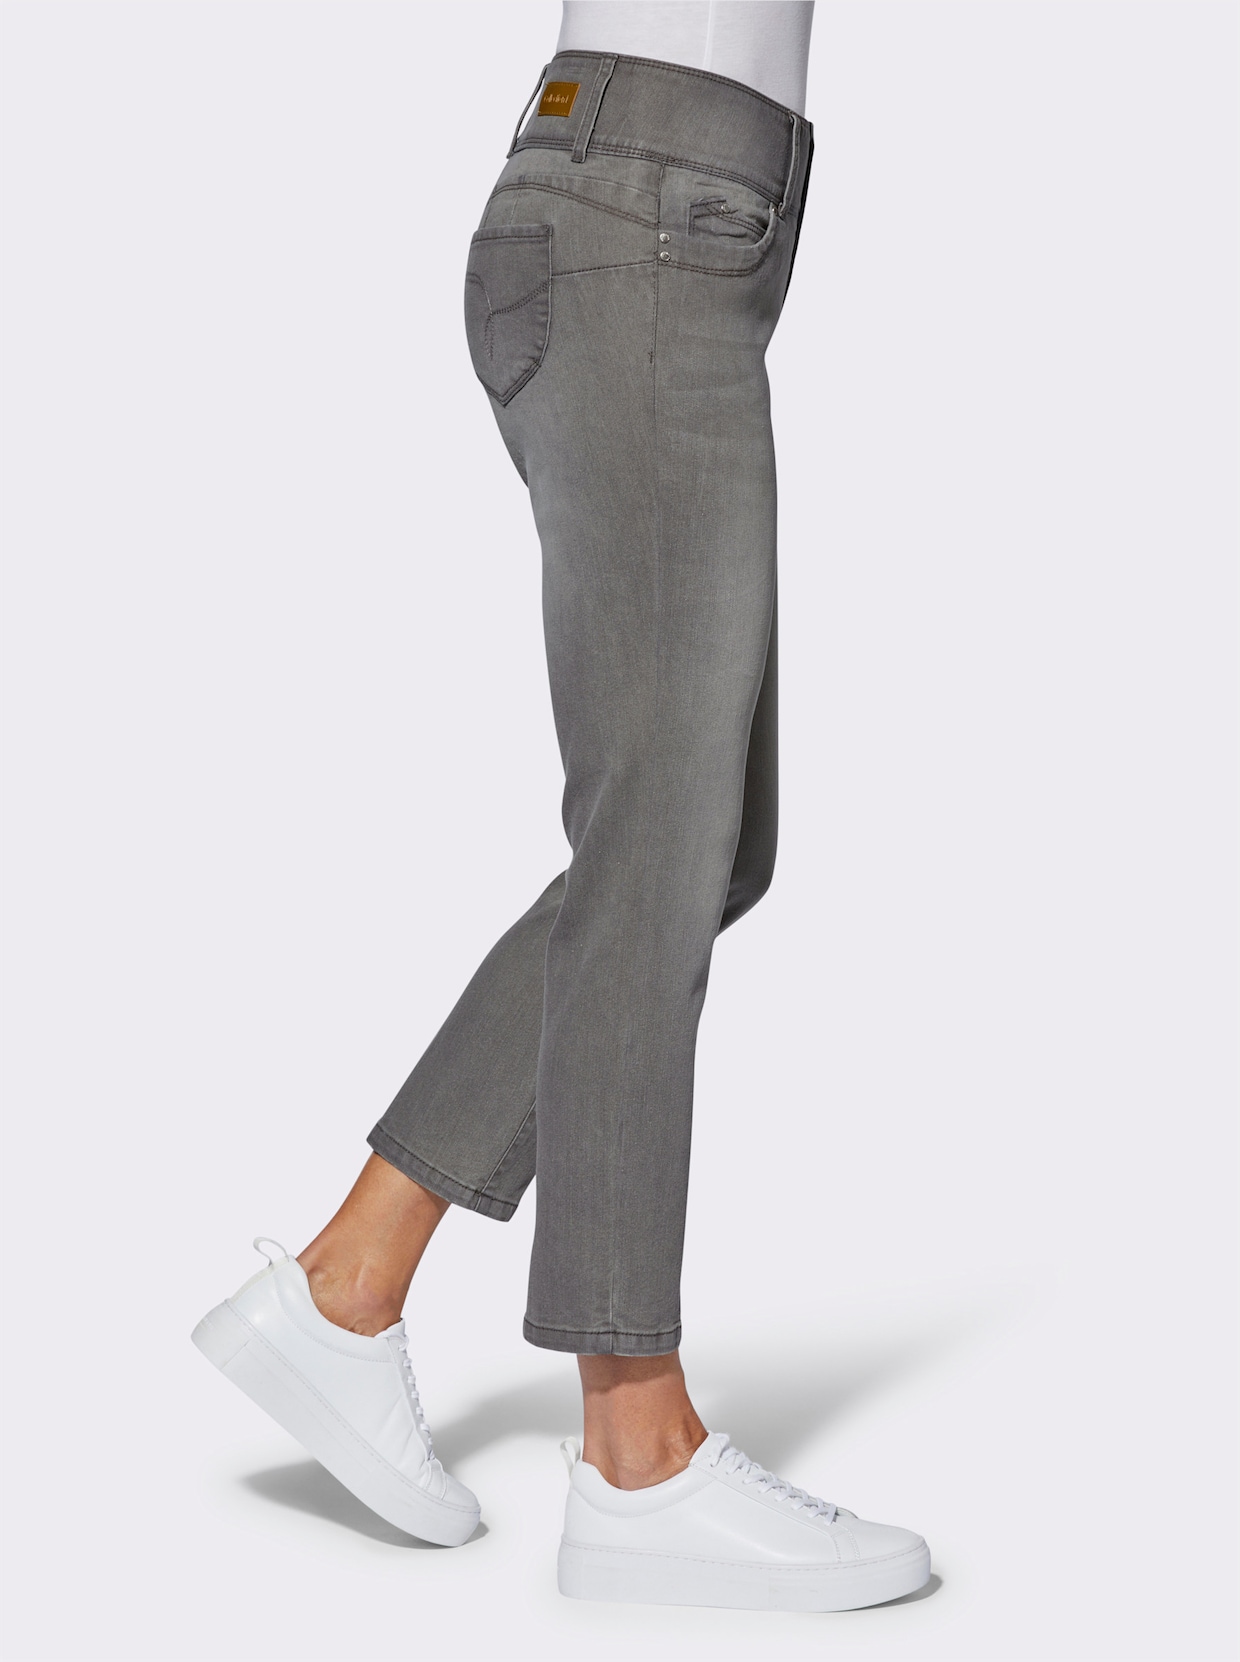 Ankle jeans - grey-denim